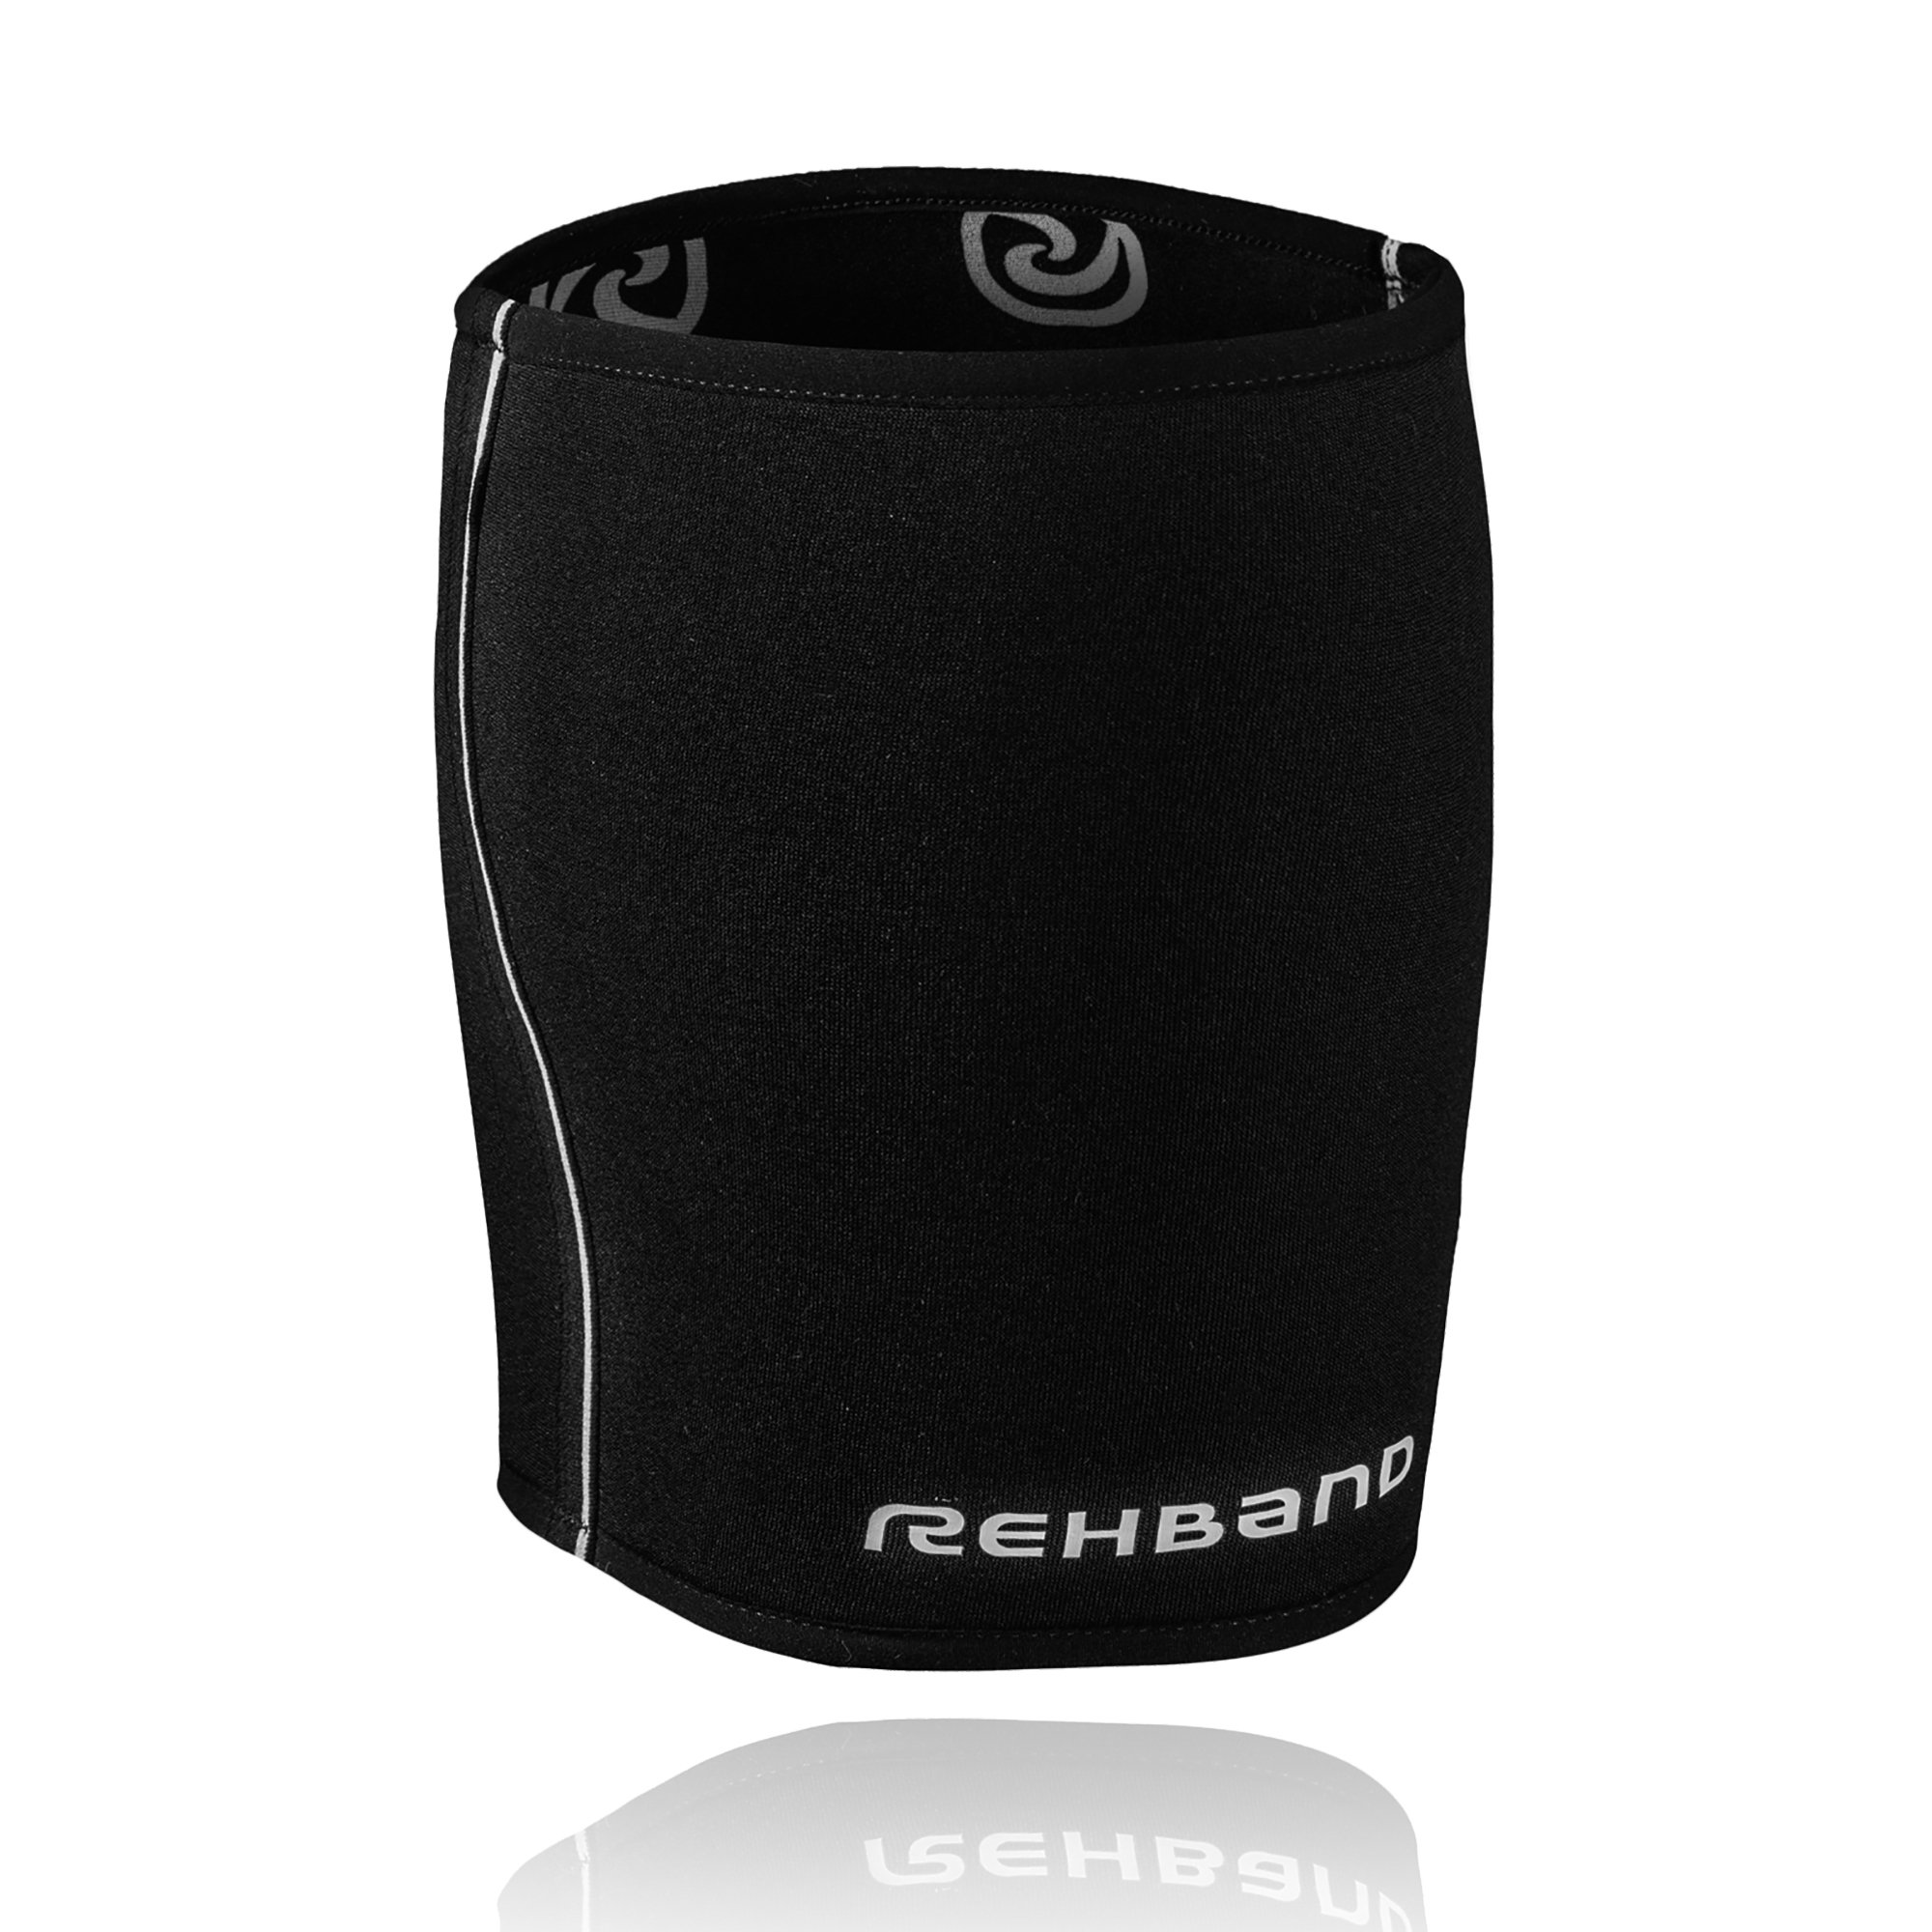 Rehband QD Thigh Support 3mm